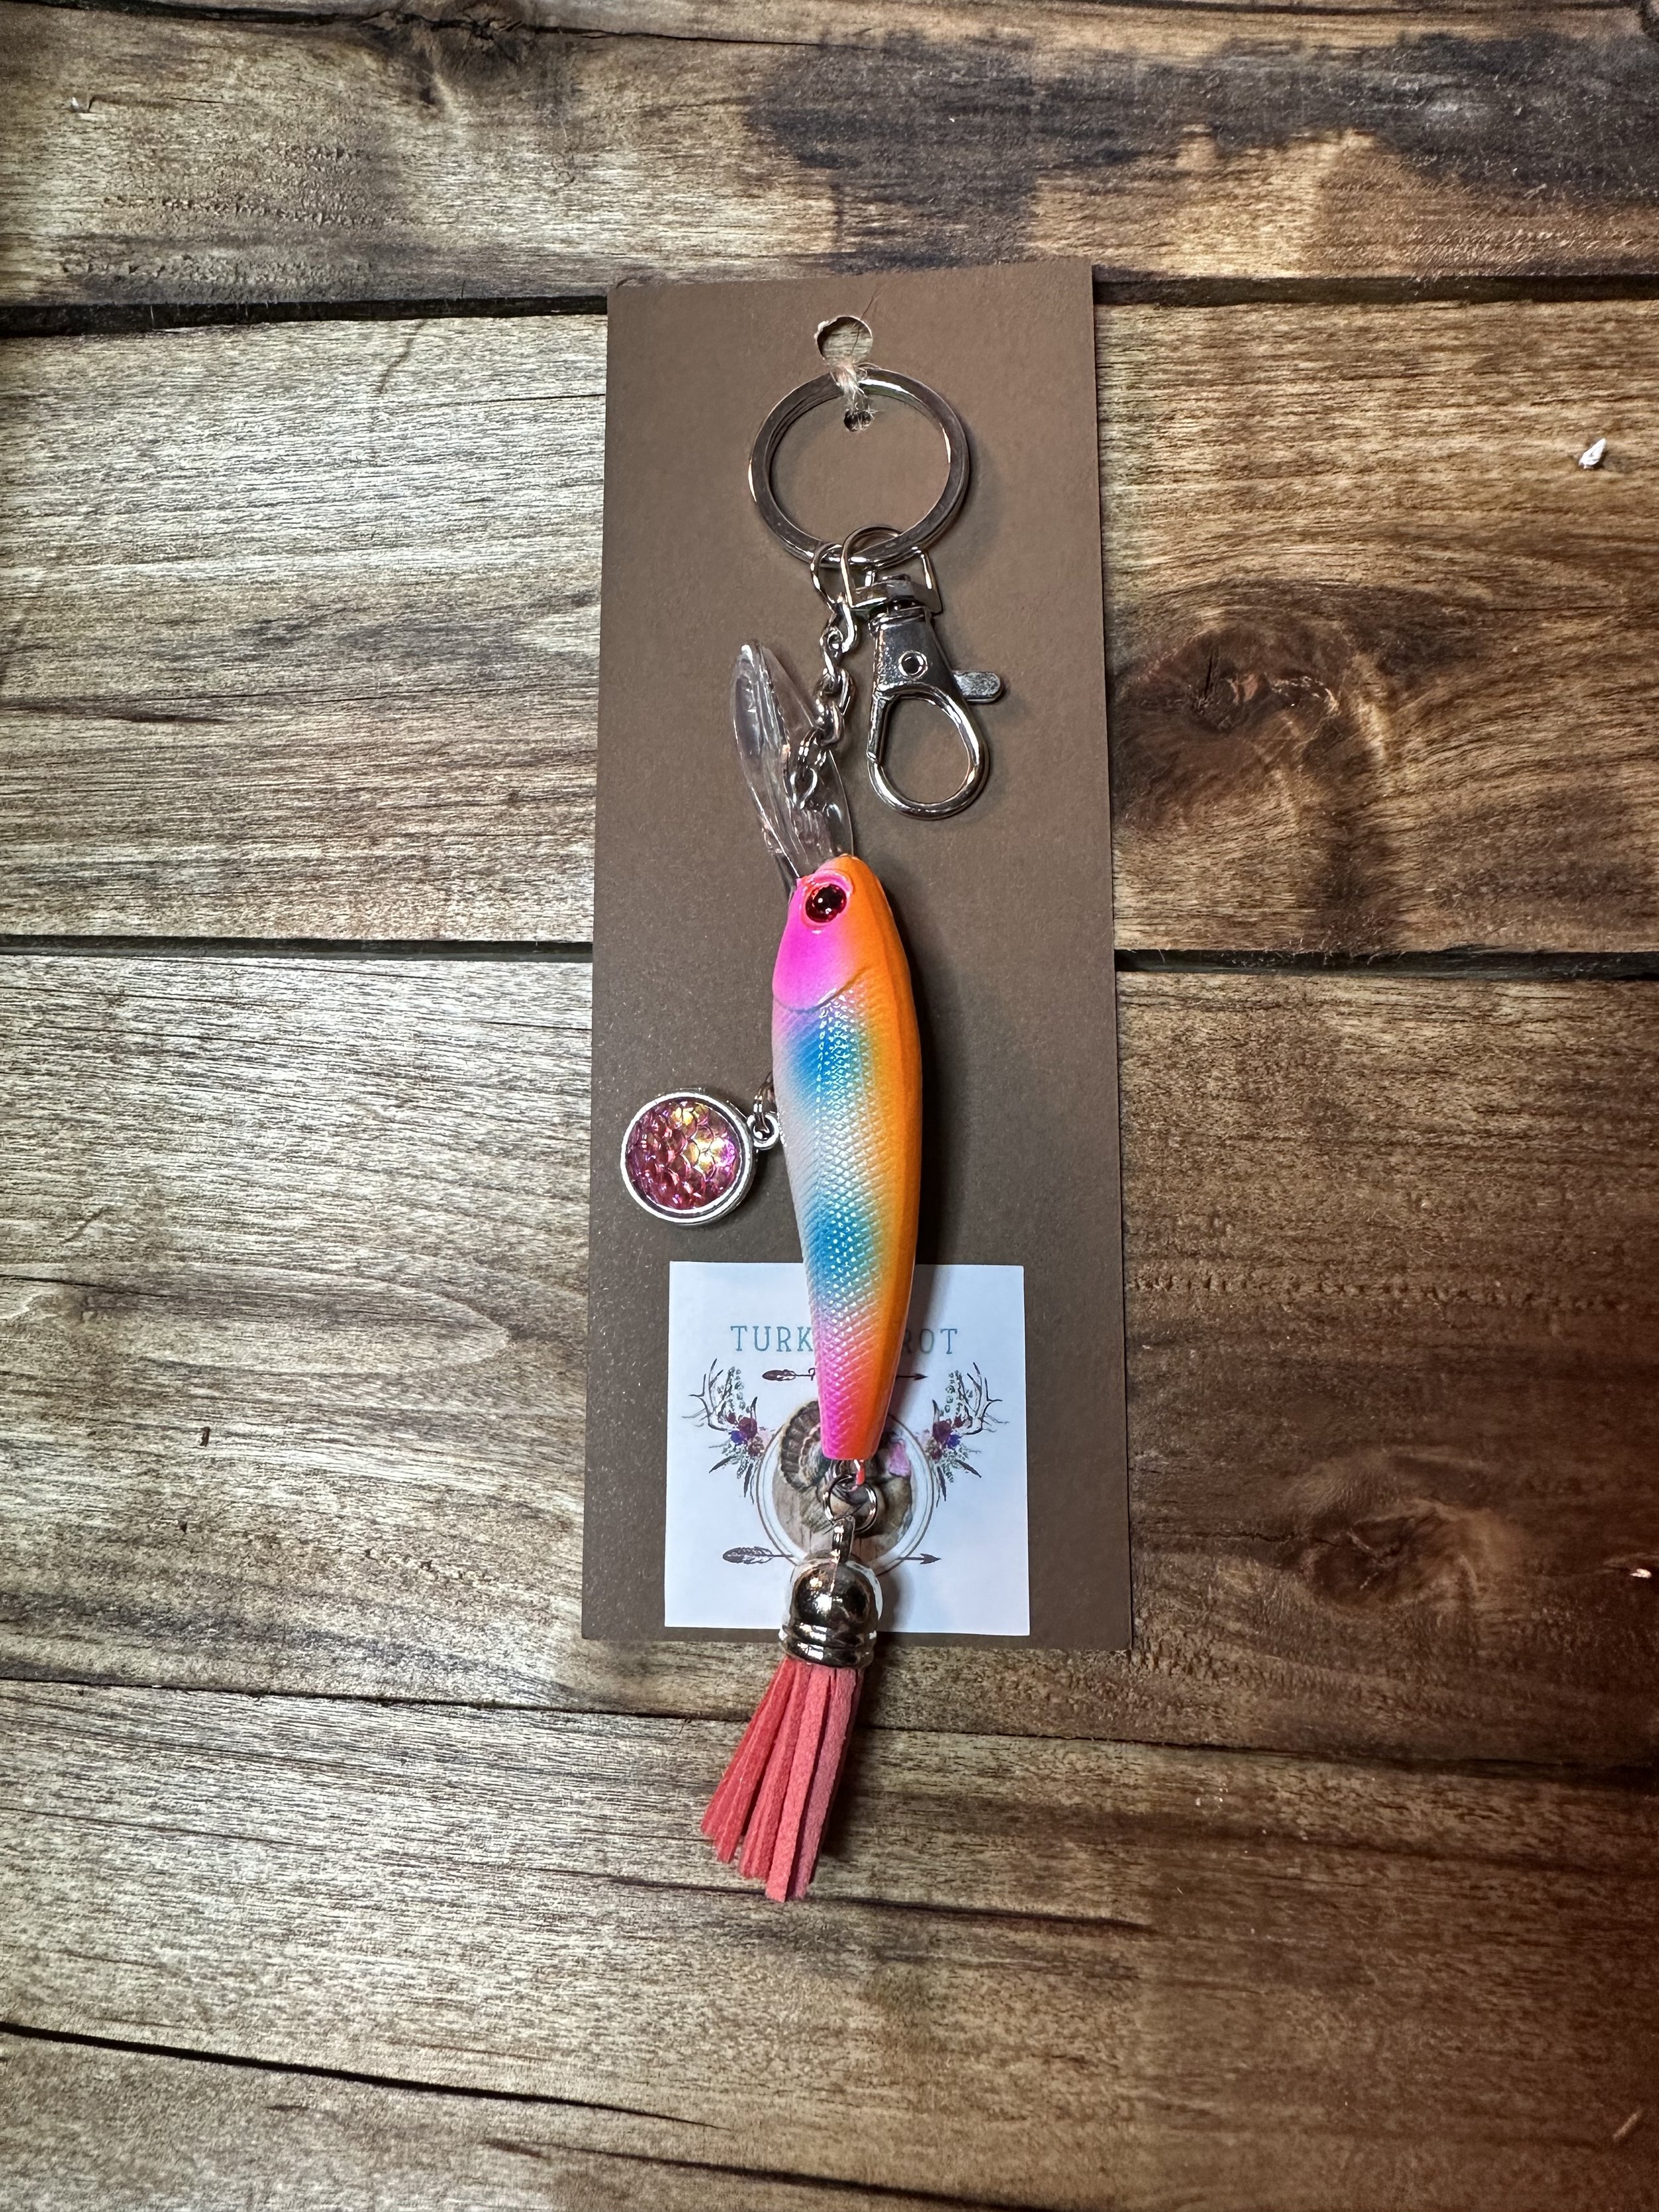 Fishing Lure Keychain #1 — Turkey Trot Farm & Shop LLC